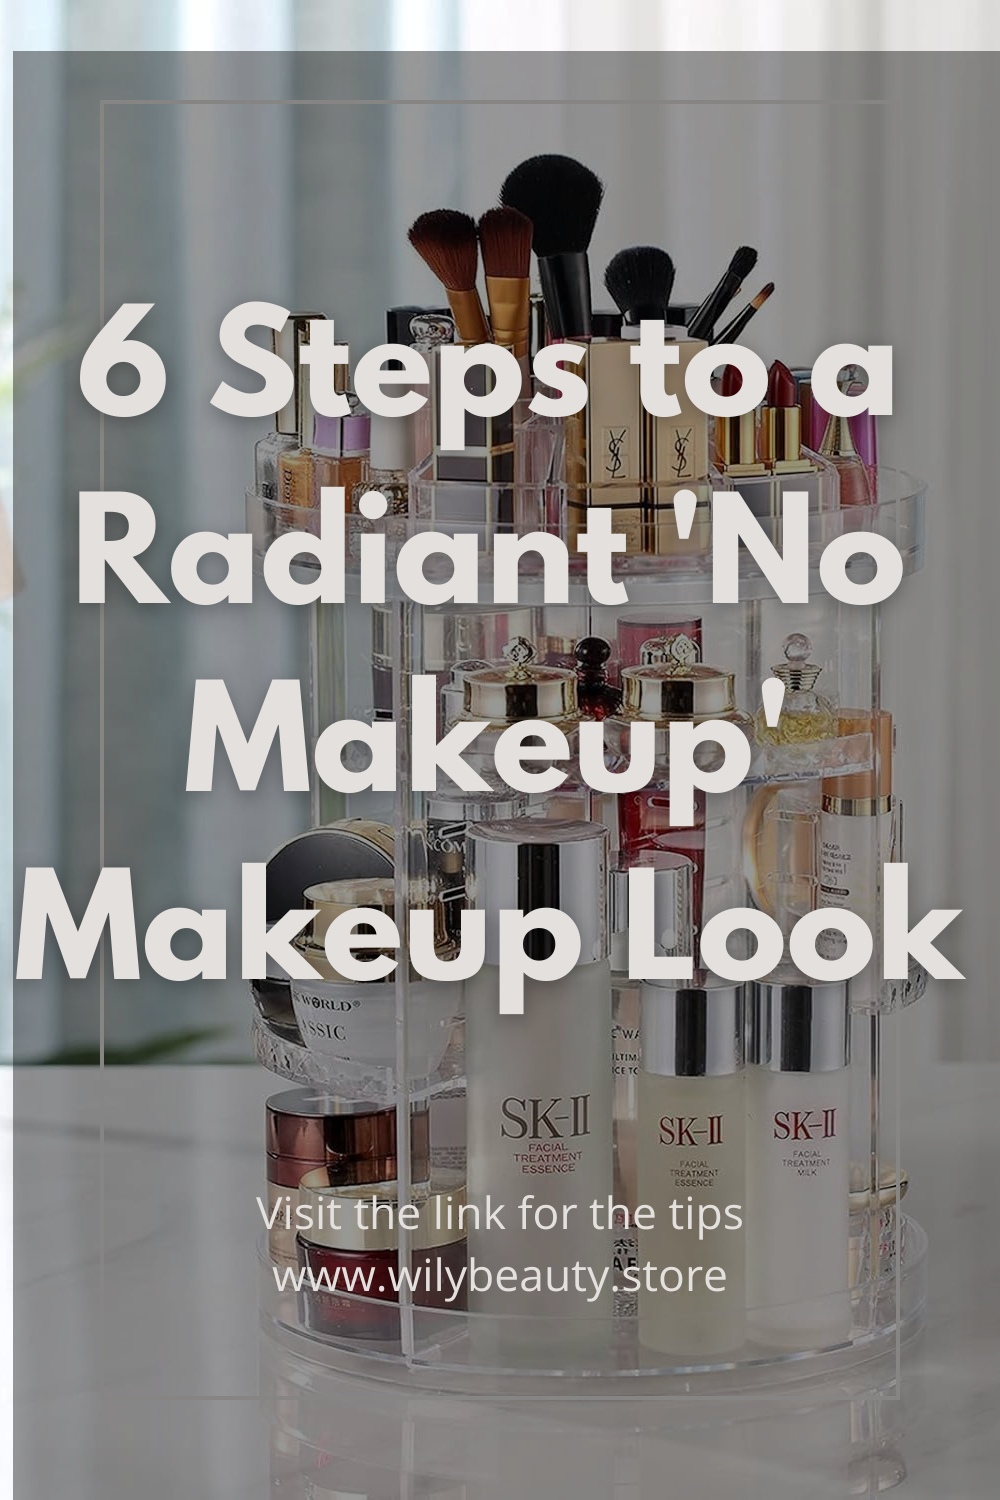 6 Steps to a Radiant 'No Makeup' Makeup Look